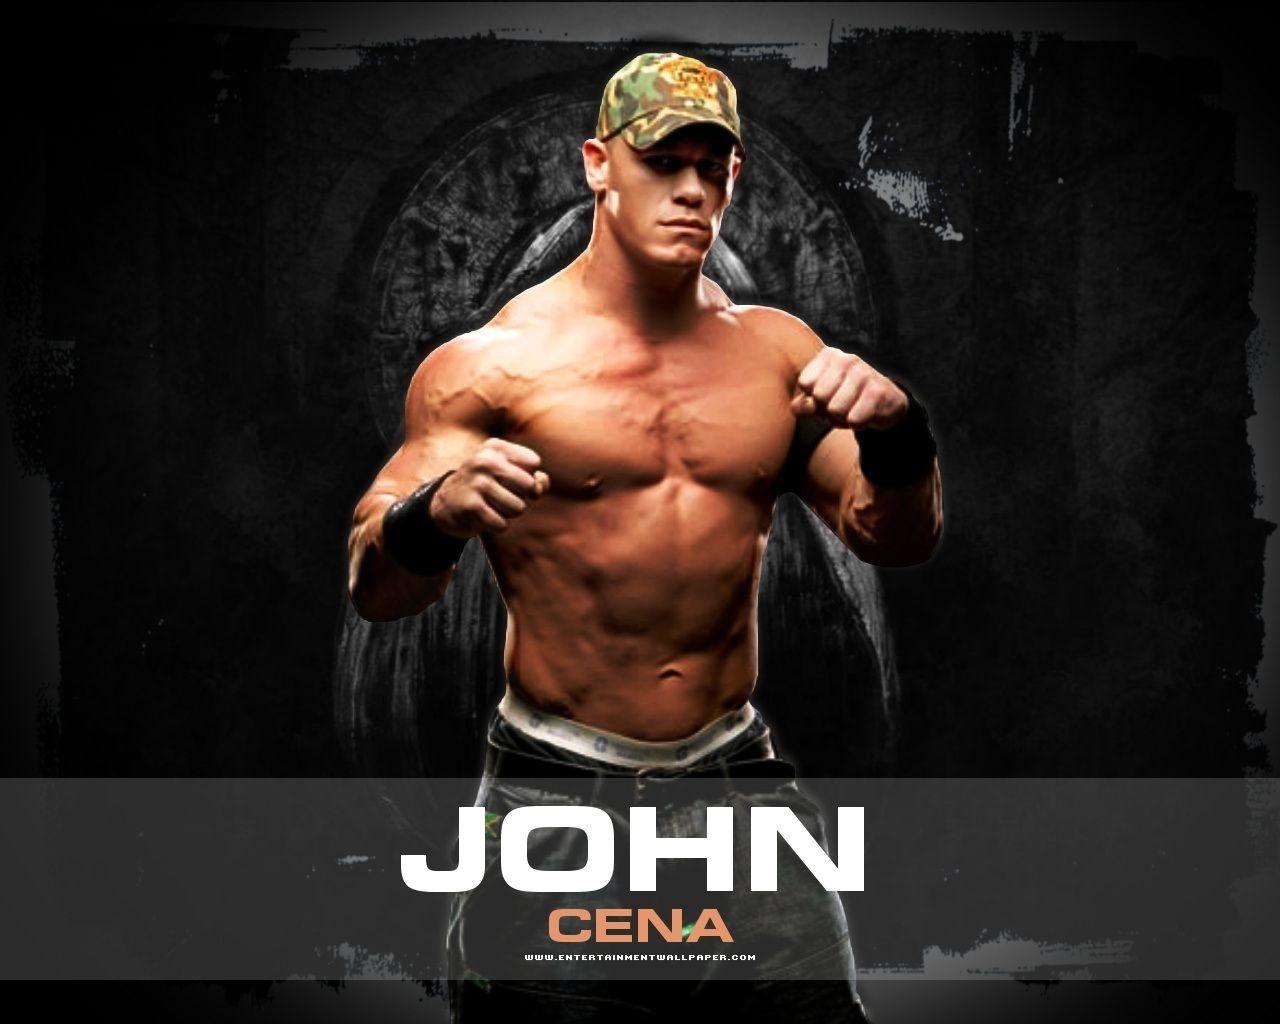 WWE John Cena Images Download - Wallpaper Cave